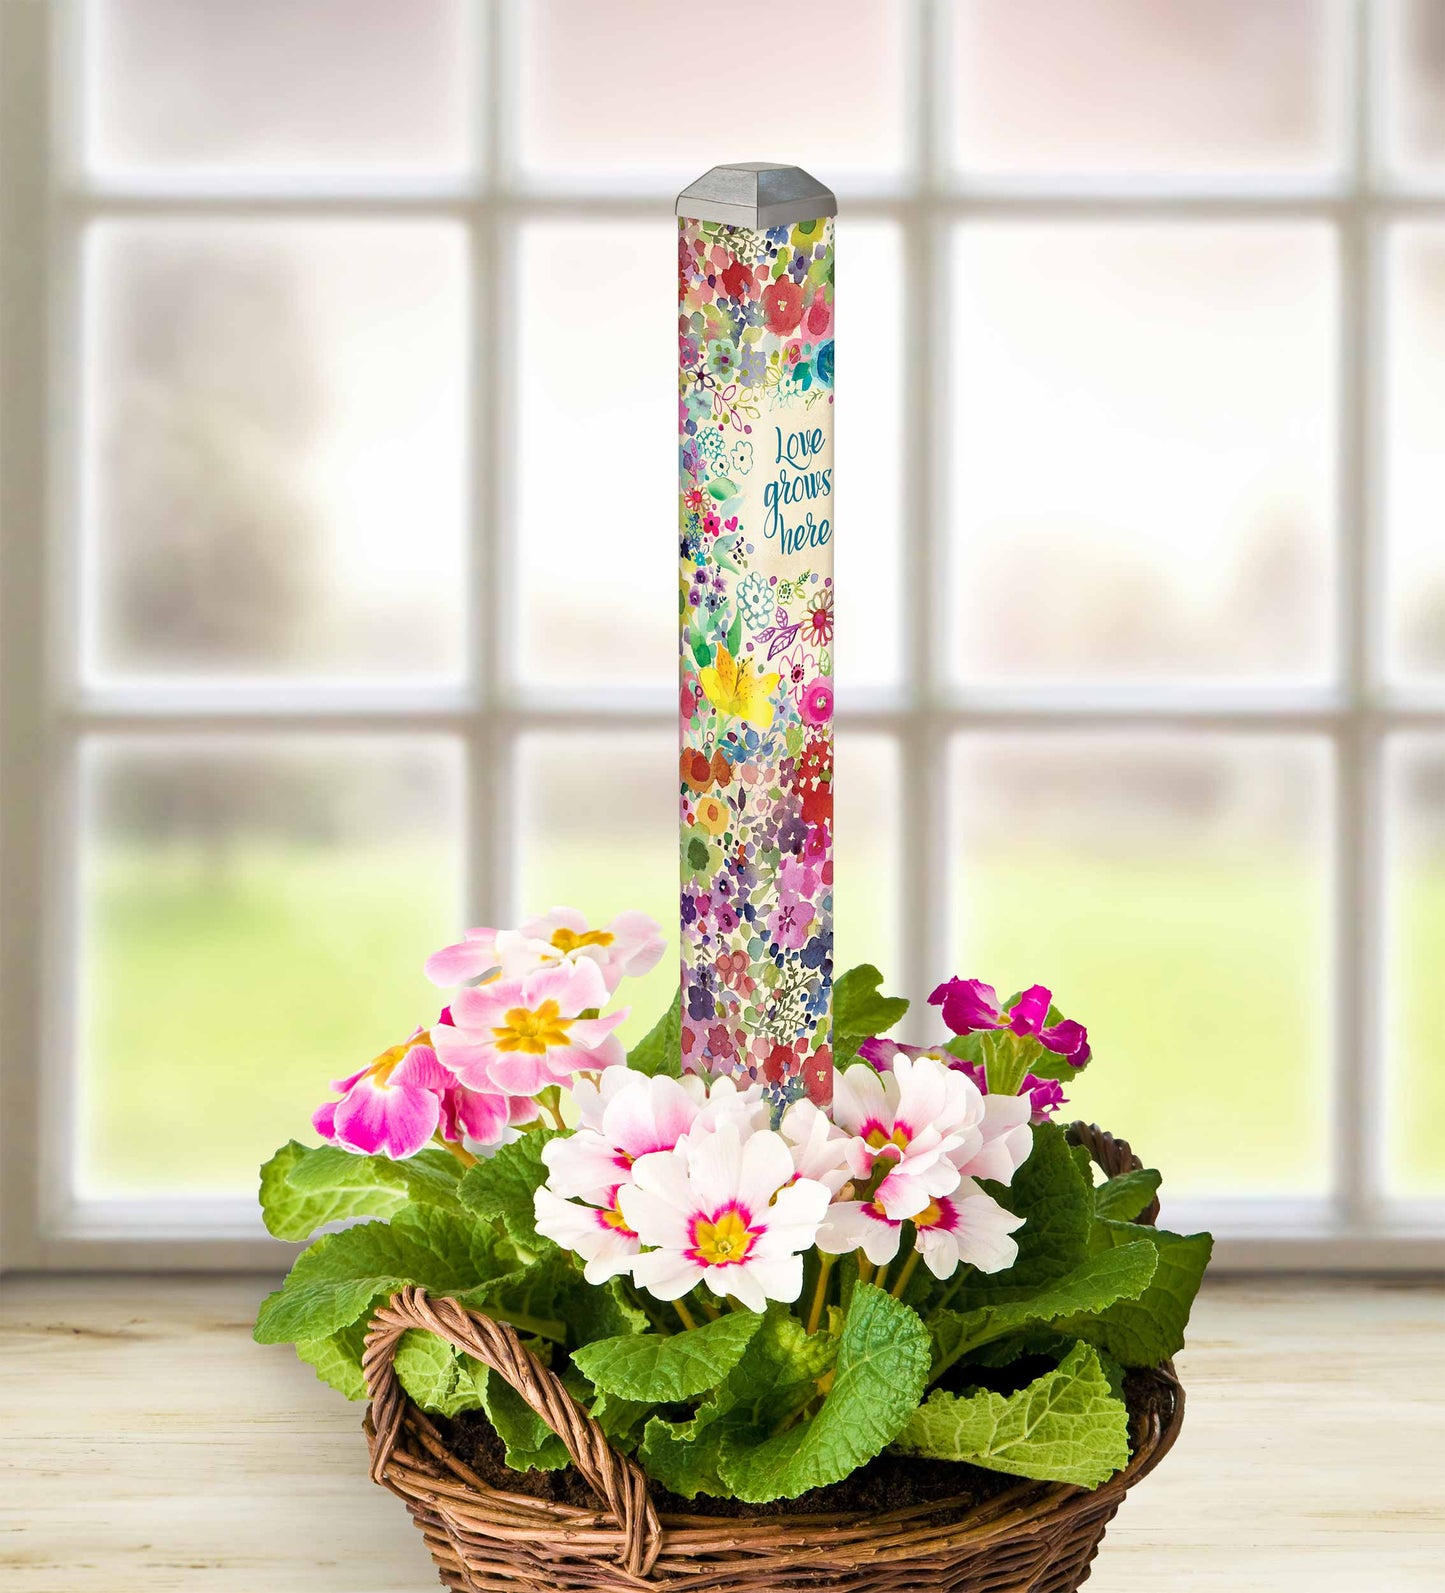 16" Mini Art Pole Full Bloom